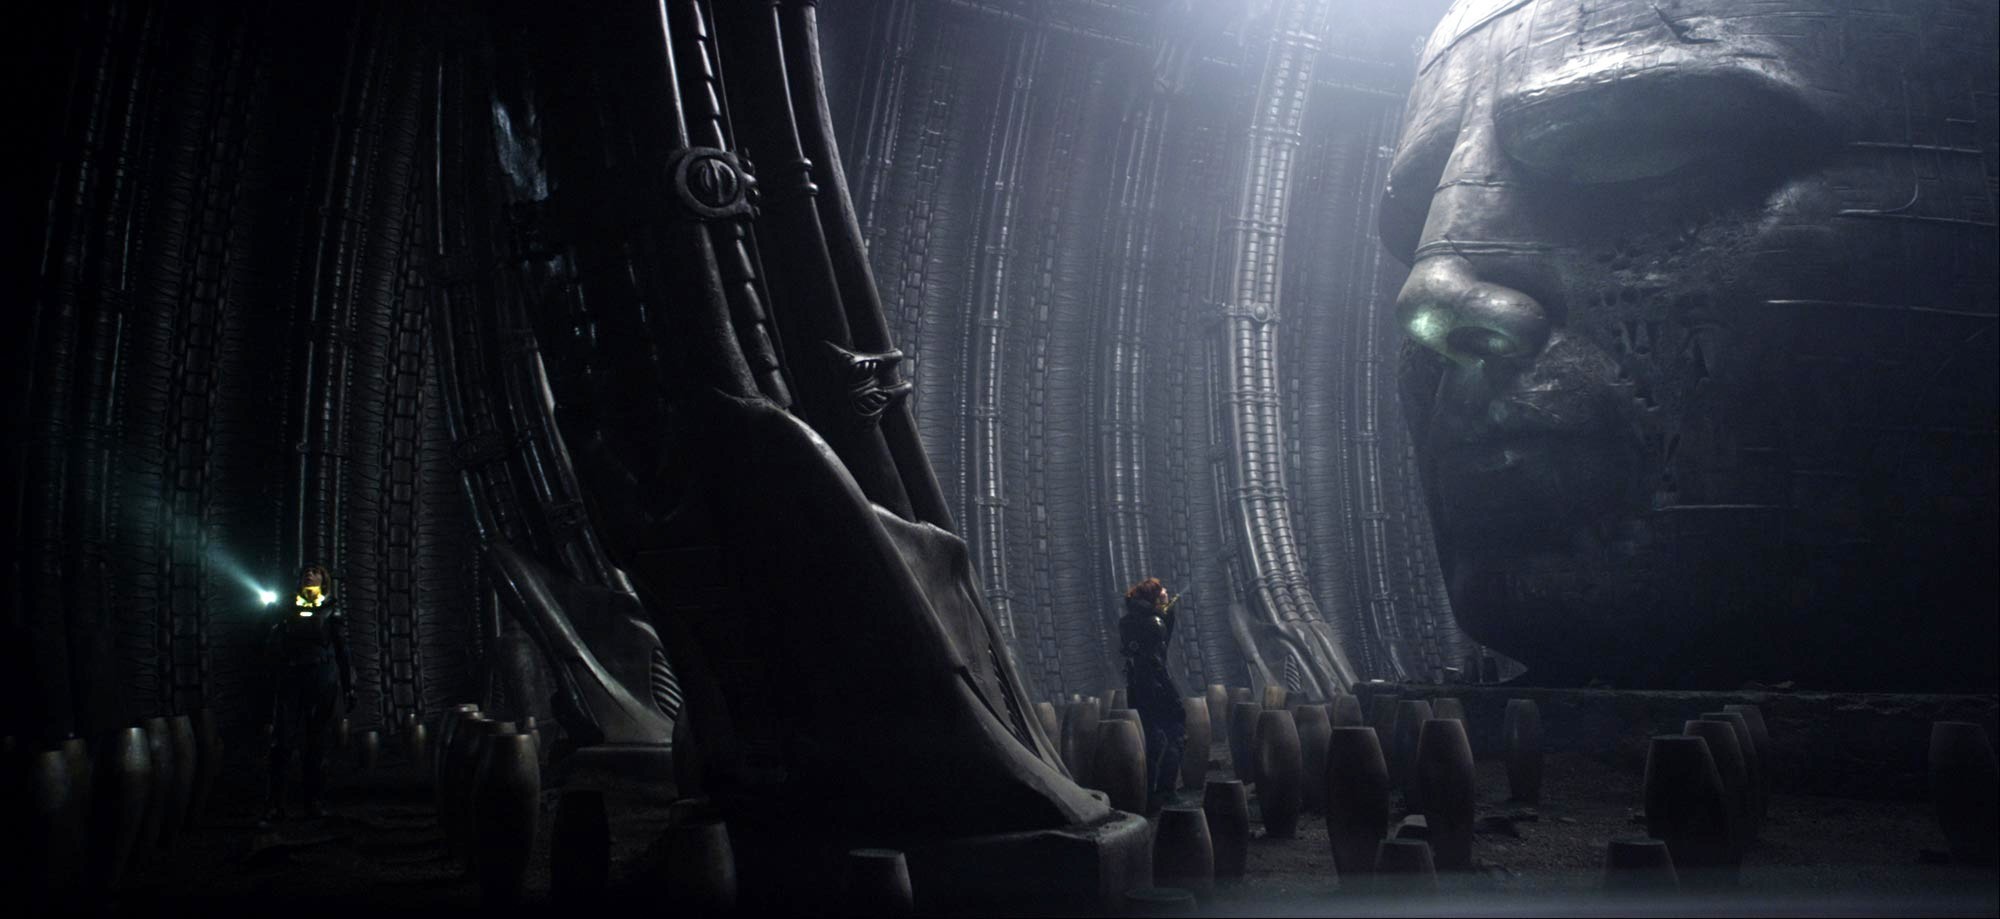 A scene from 20th Century Fox's Prometheus (2012)